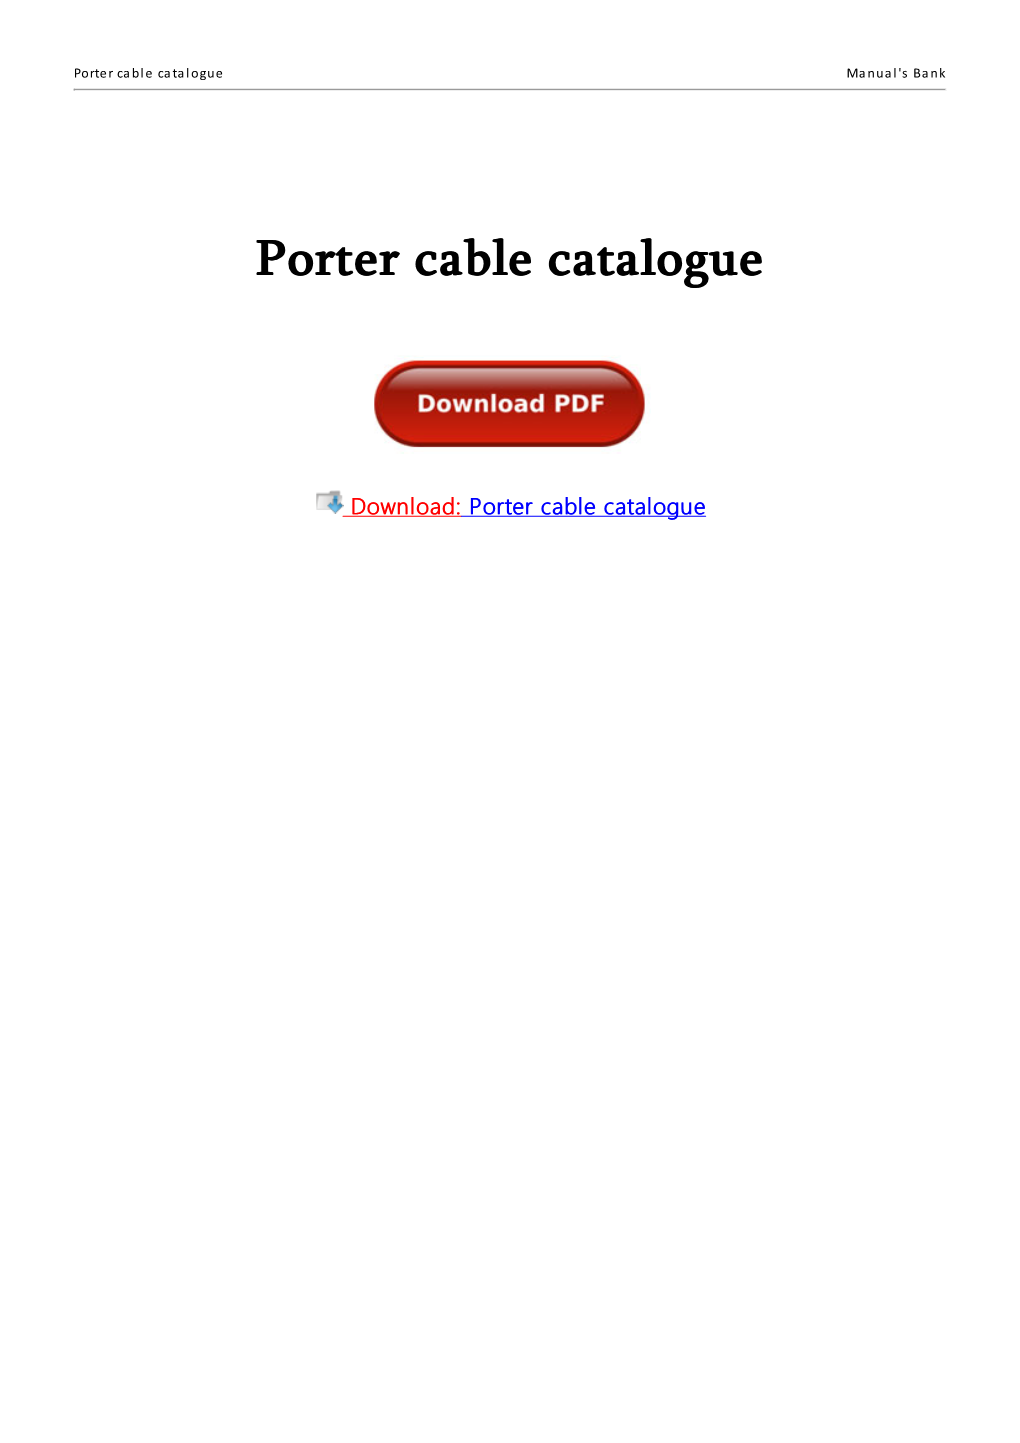 Porter Cable Catalogue Manual's Bank